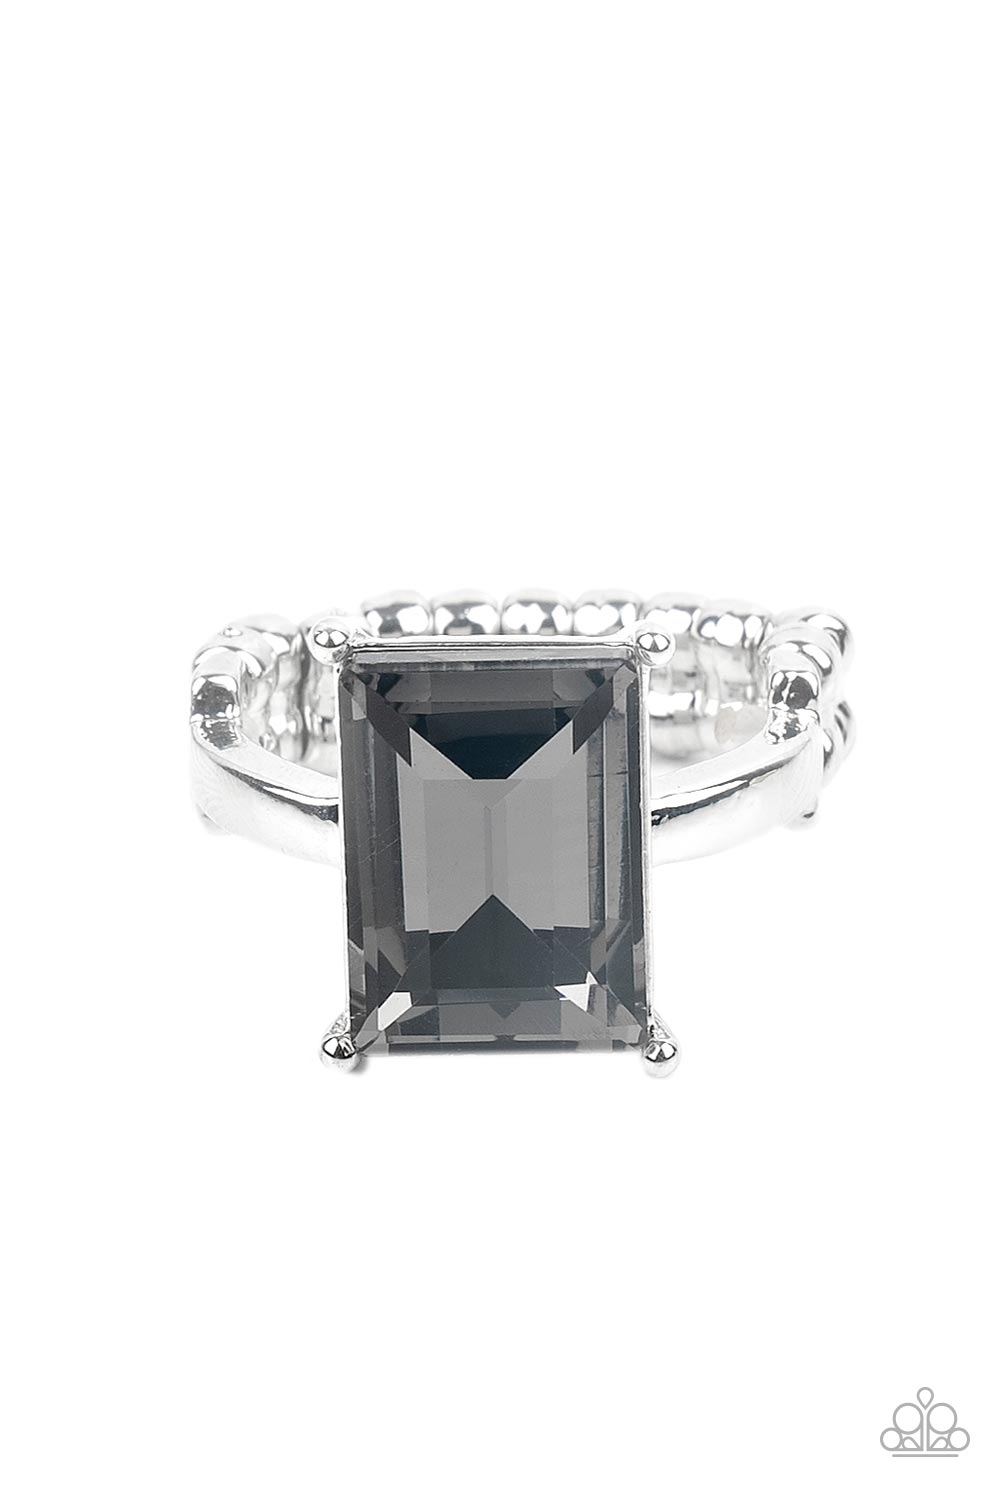 Social Glow Silver Rhinestone Ring - Paparazzi Accessories - lightbox -CarasShop.com - $5 Jewelry by Cara Jewels